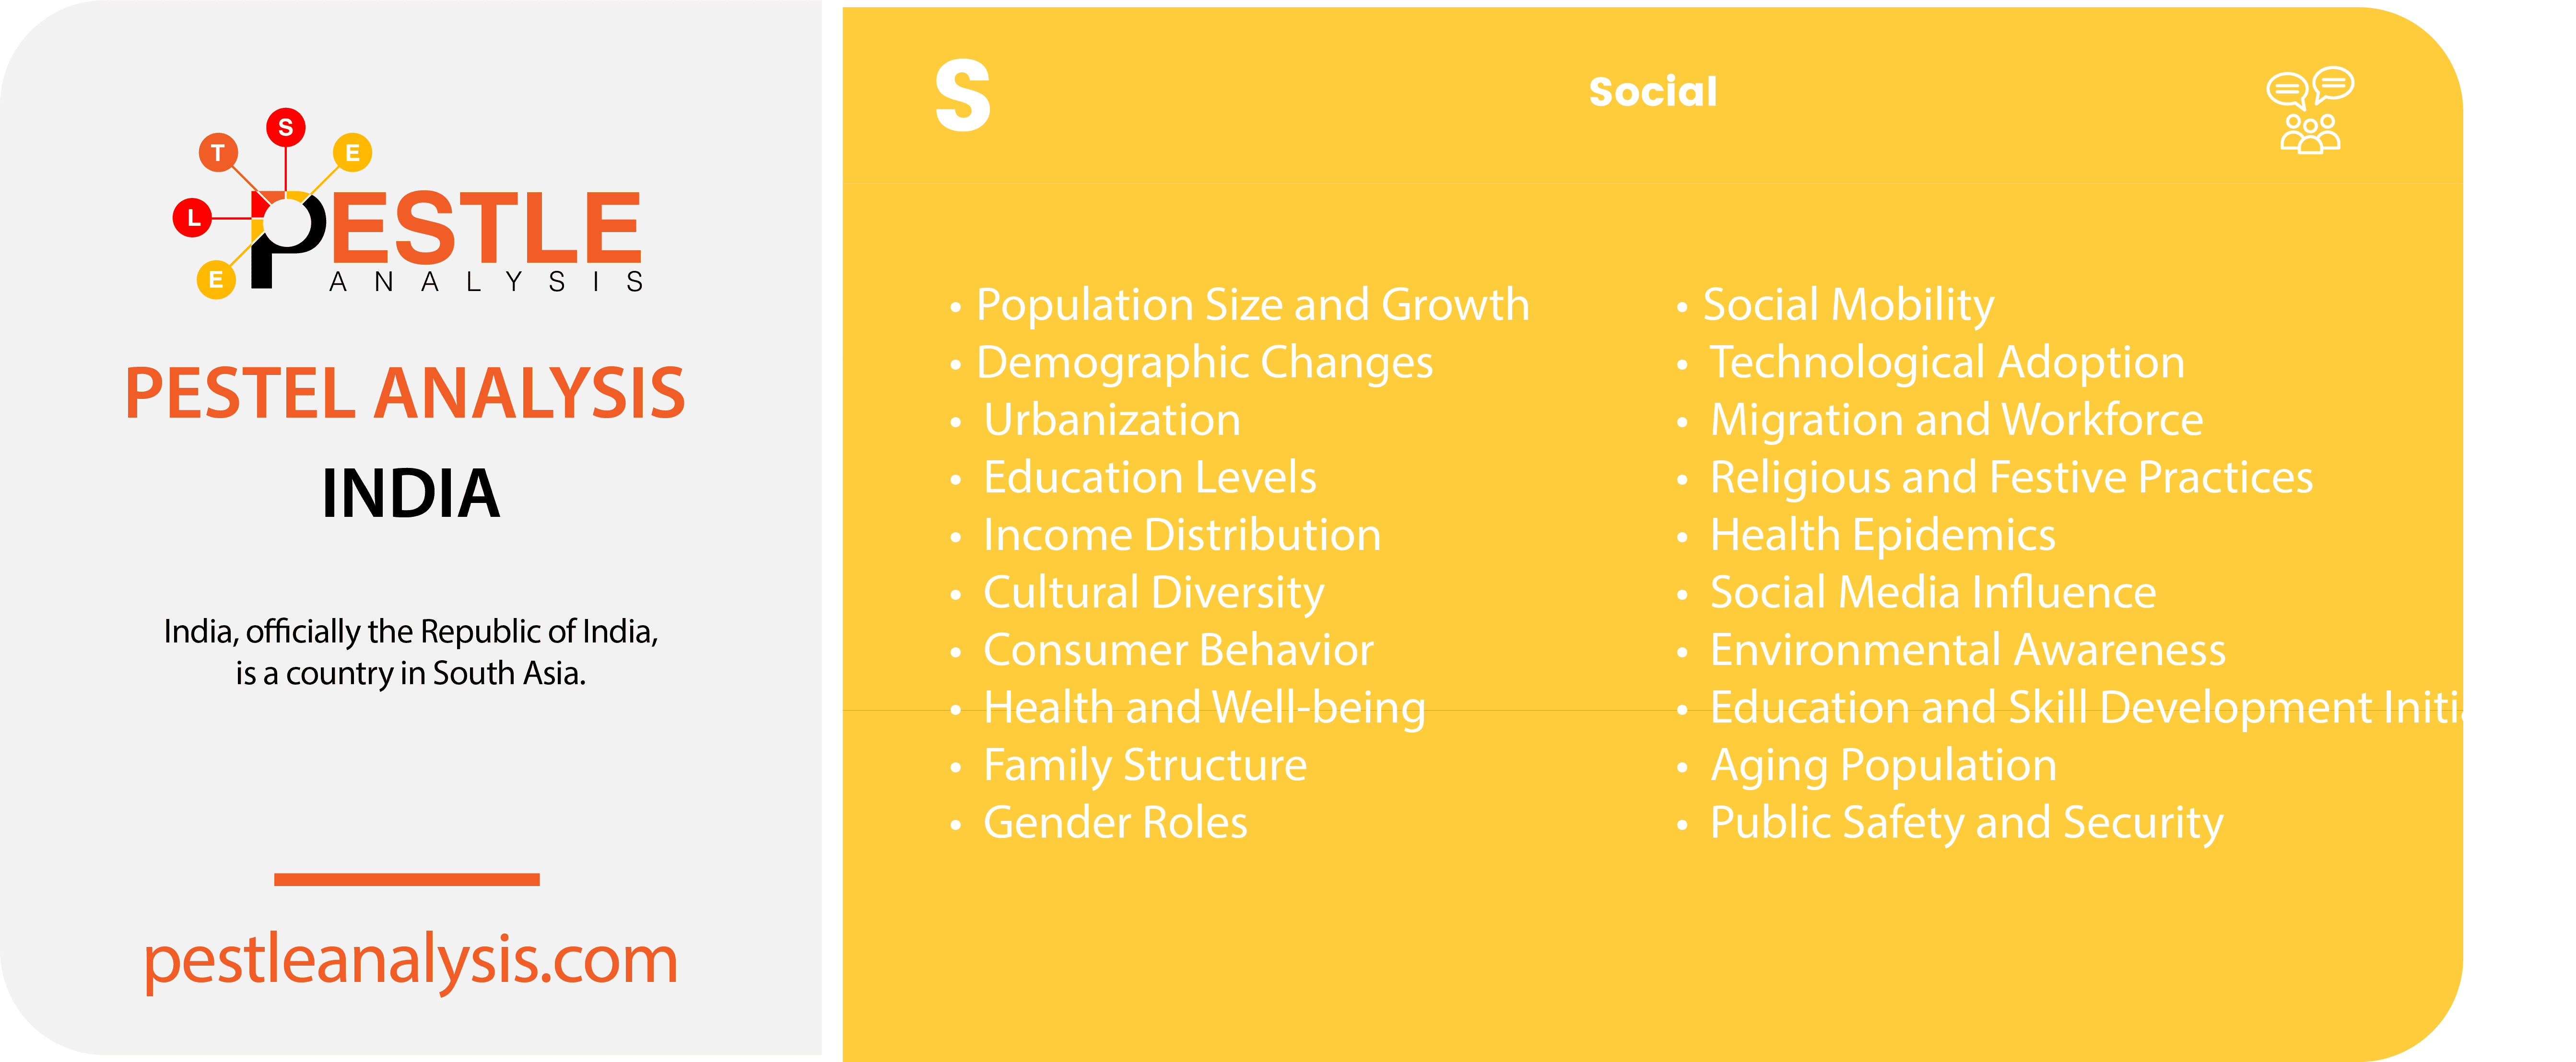 india-pestle-analysis-social-factors-template